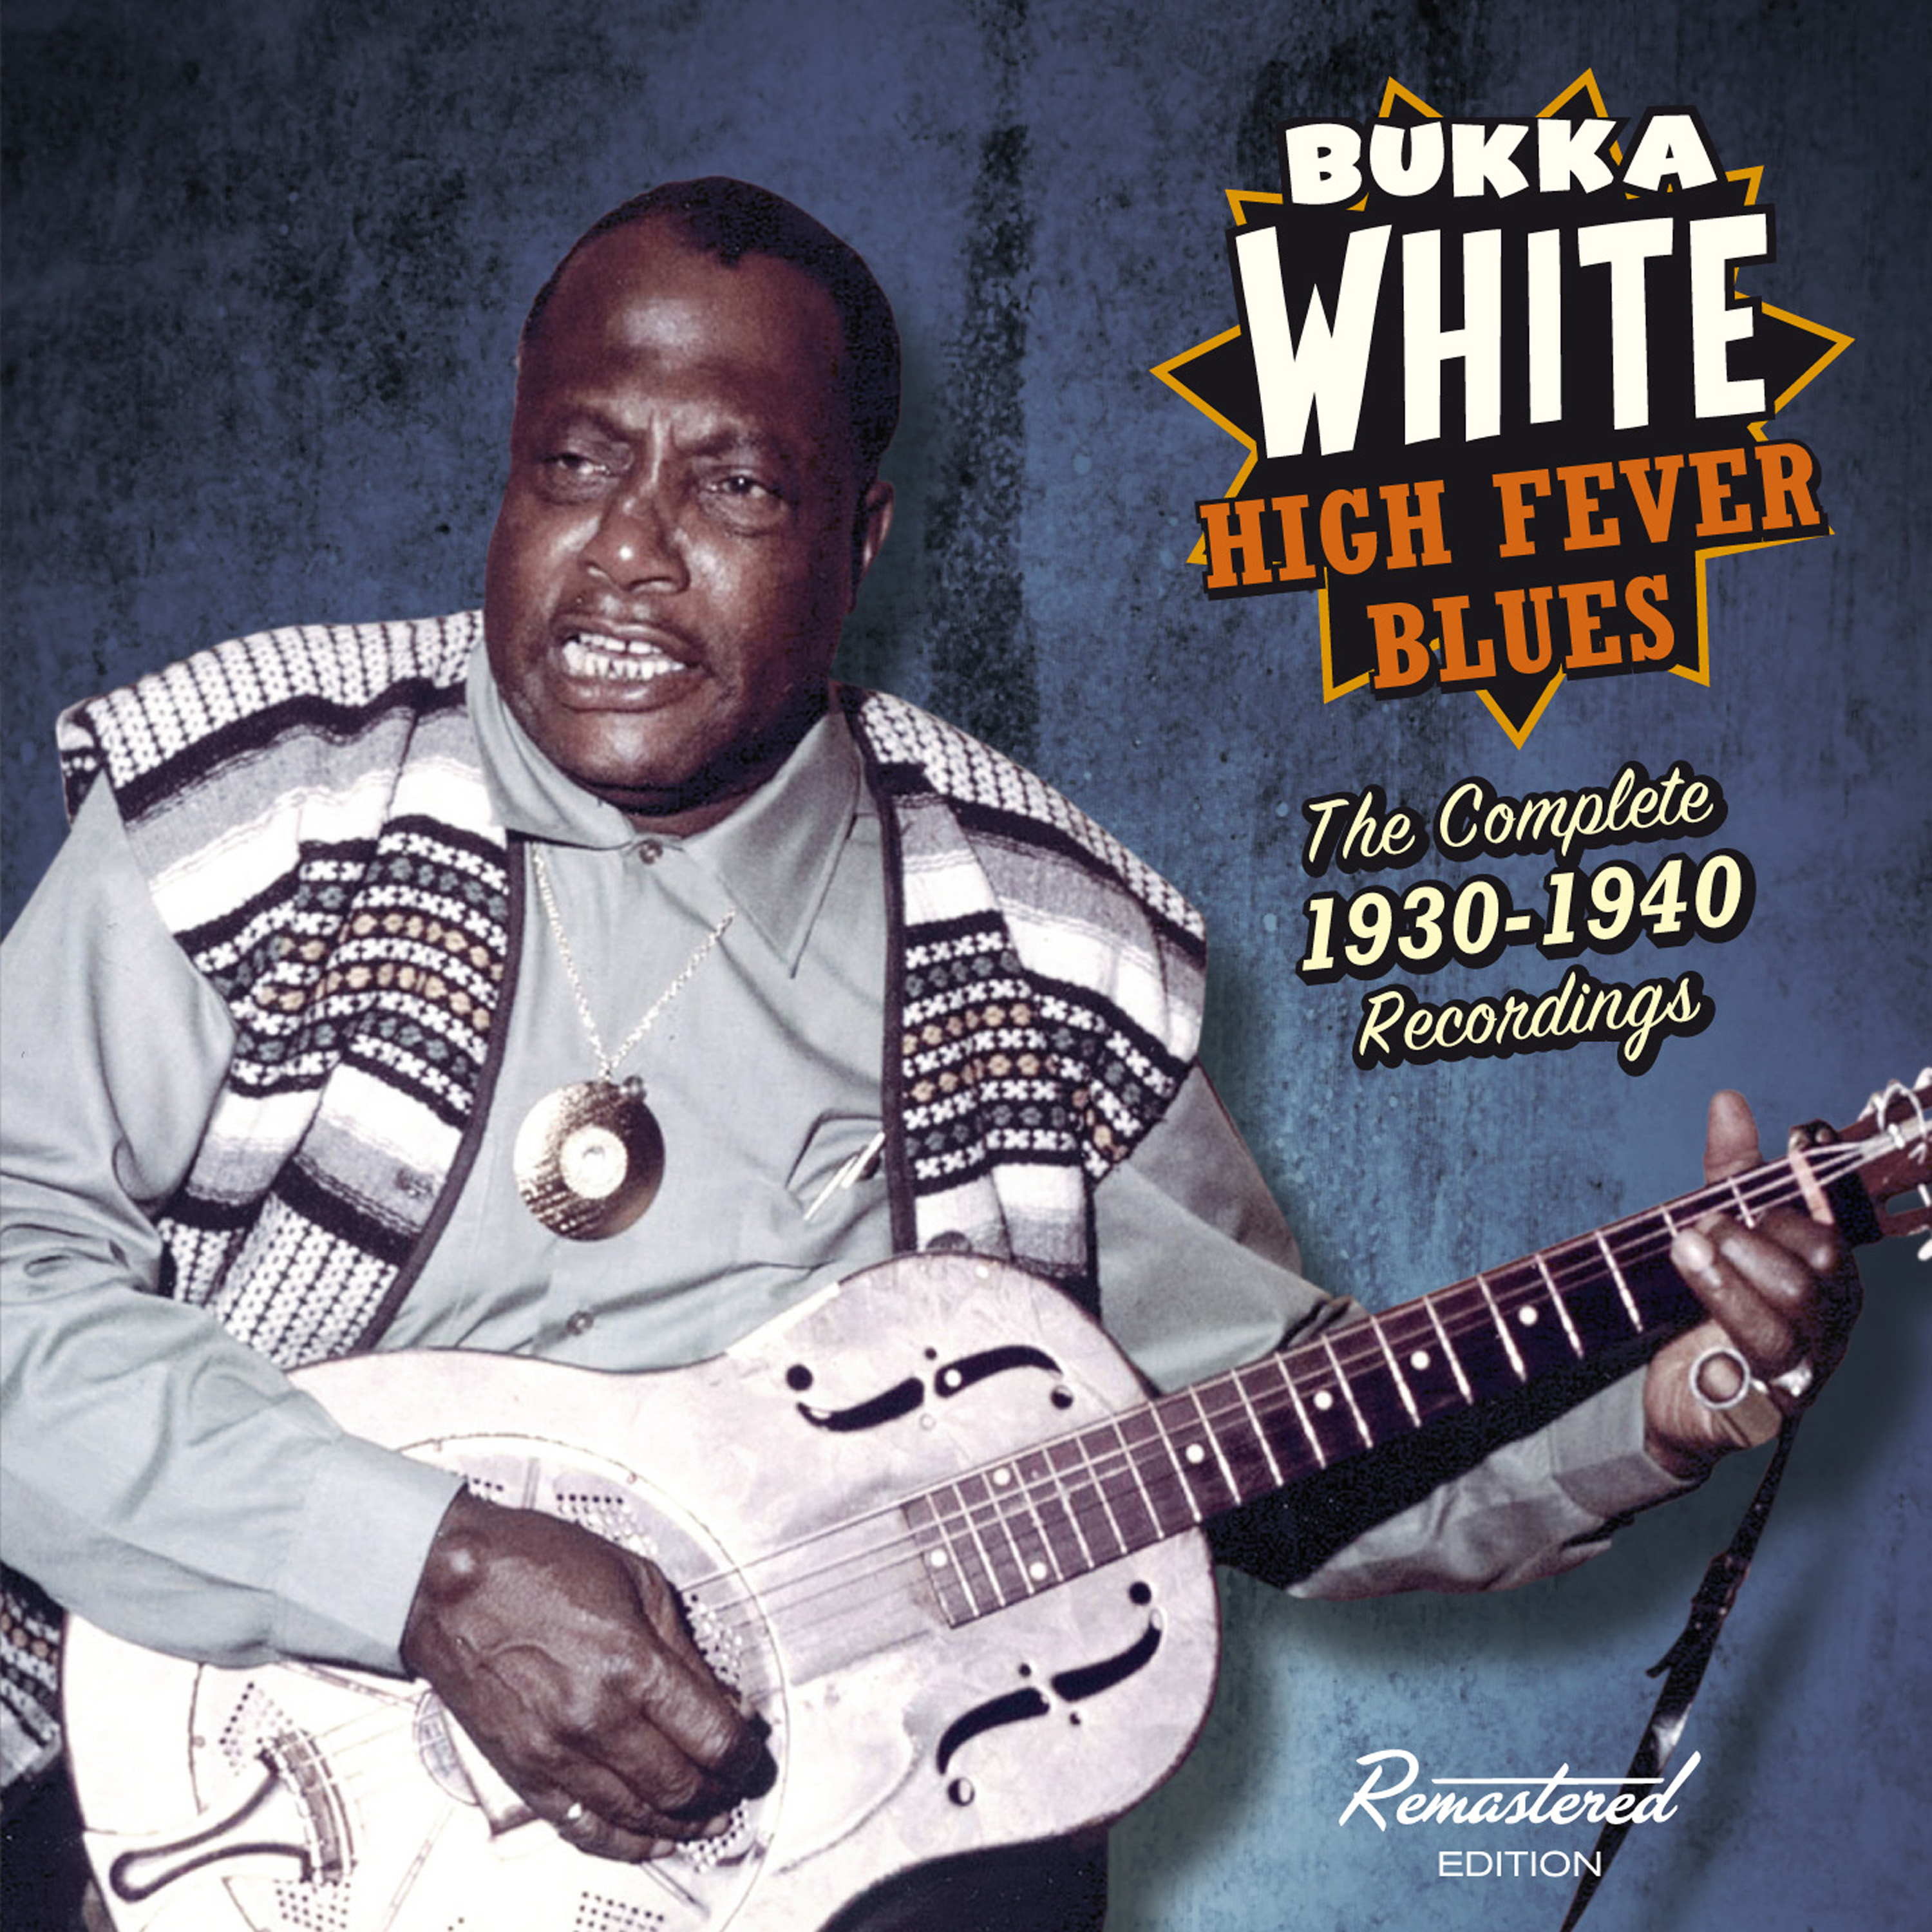 Bukka White - Early Recordings 1930-1940